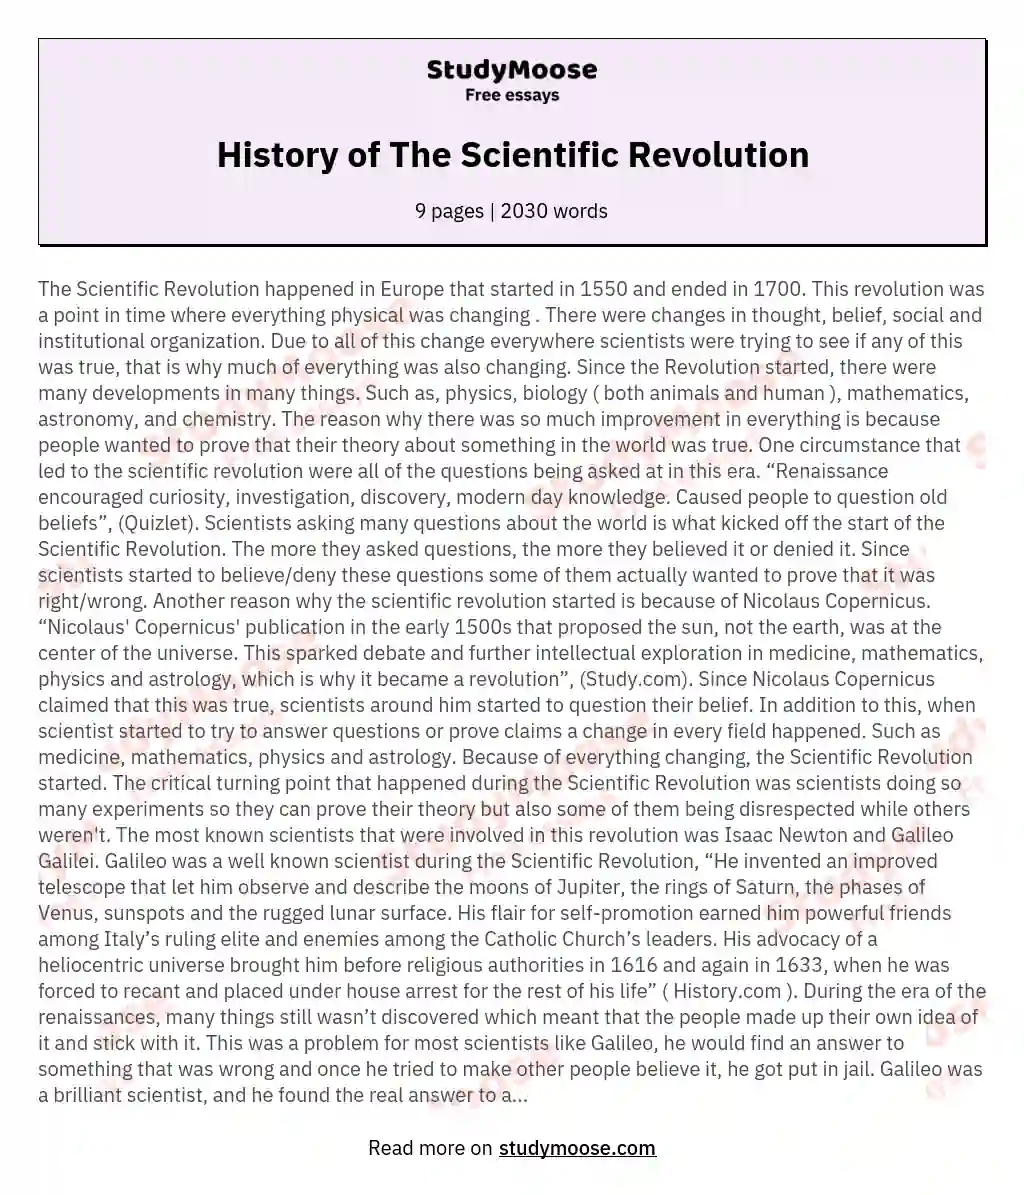 History of The Scientific Revolution essay